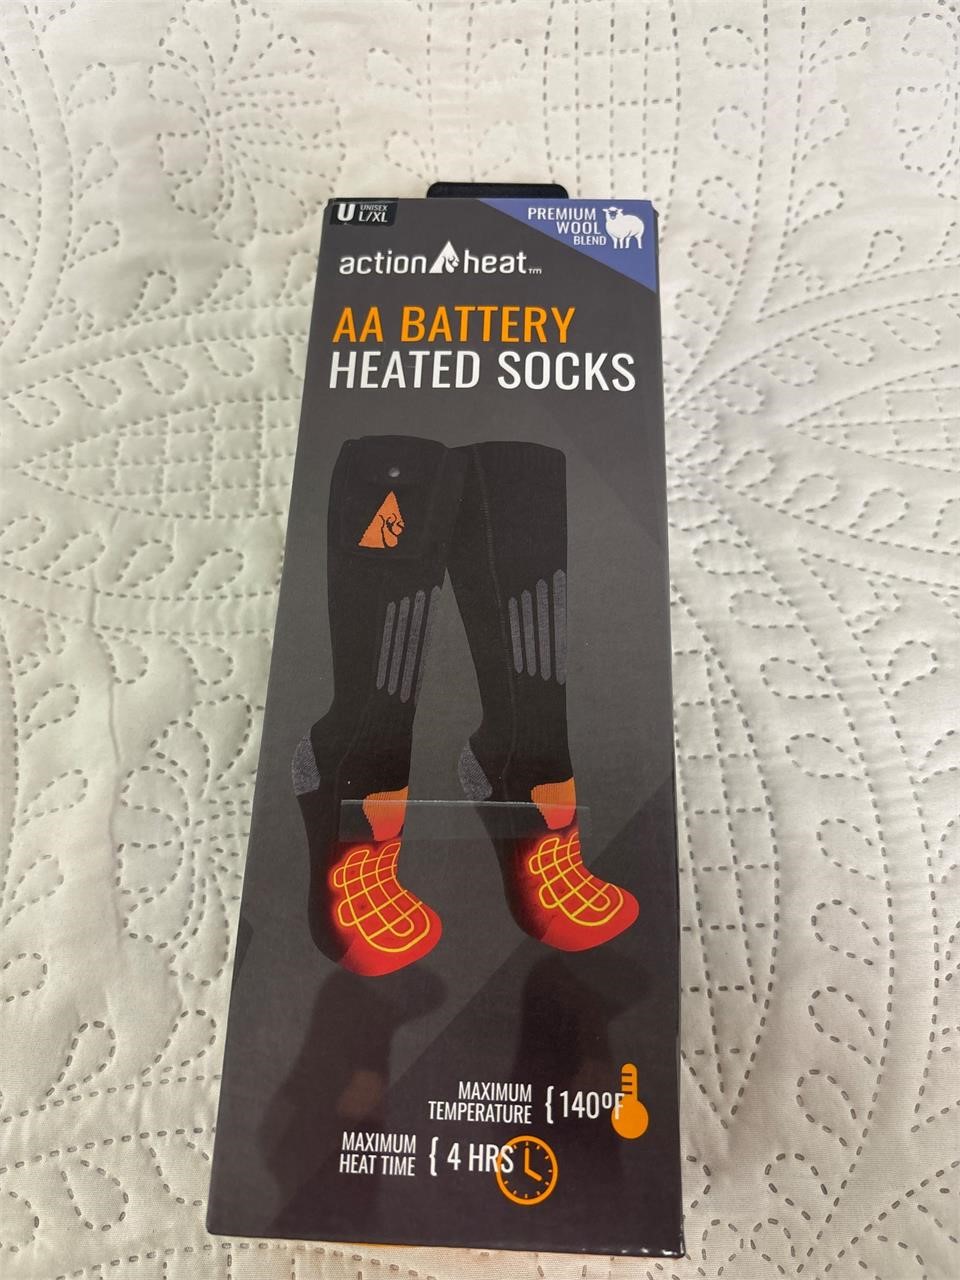 Action heat socks